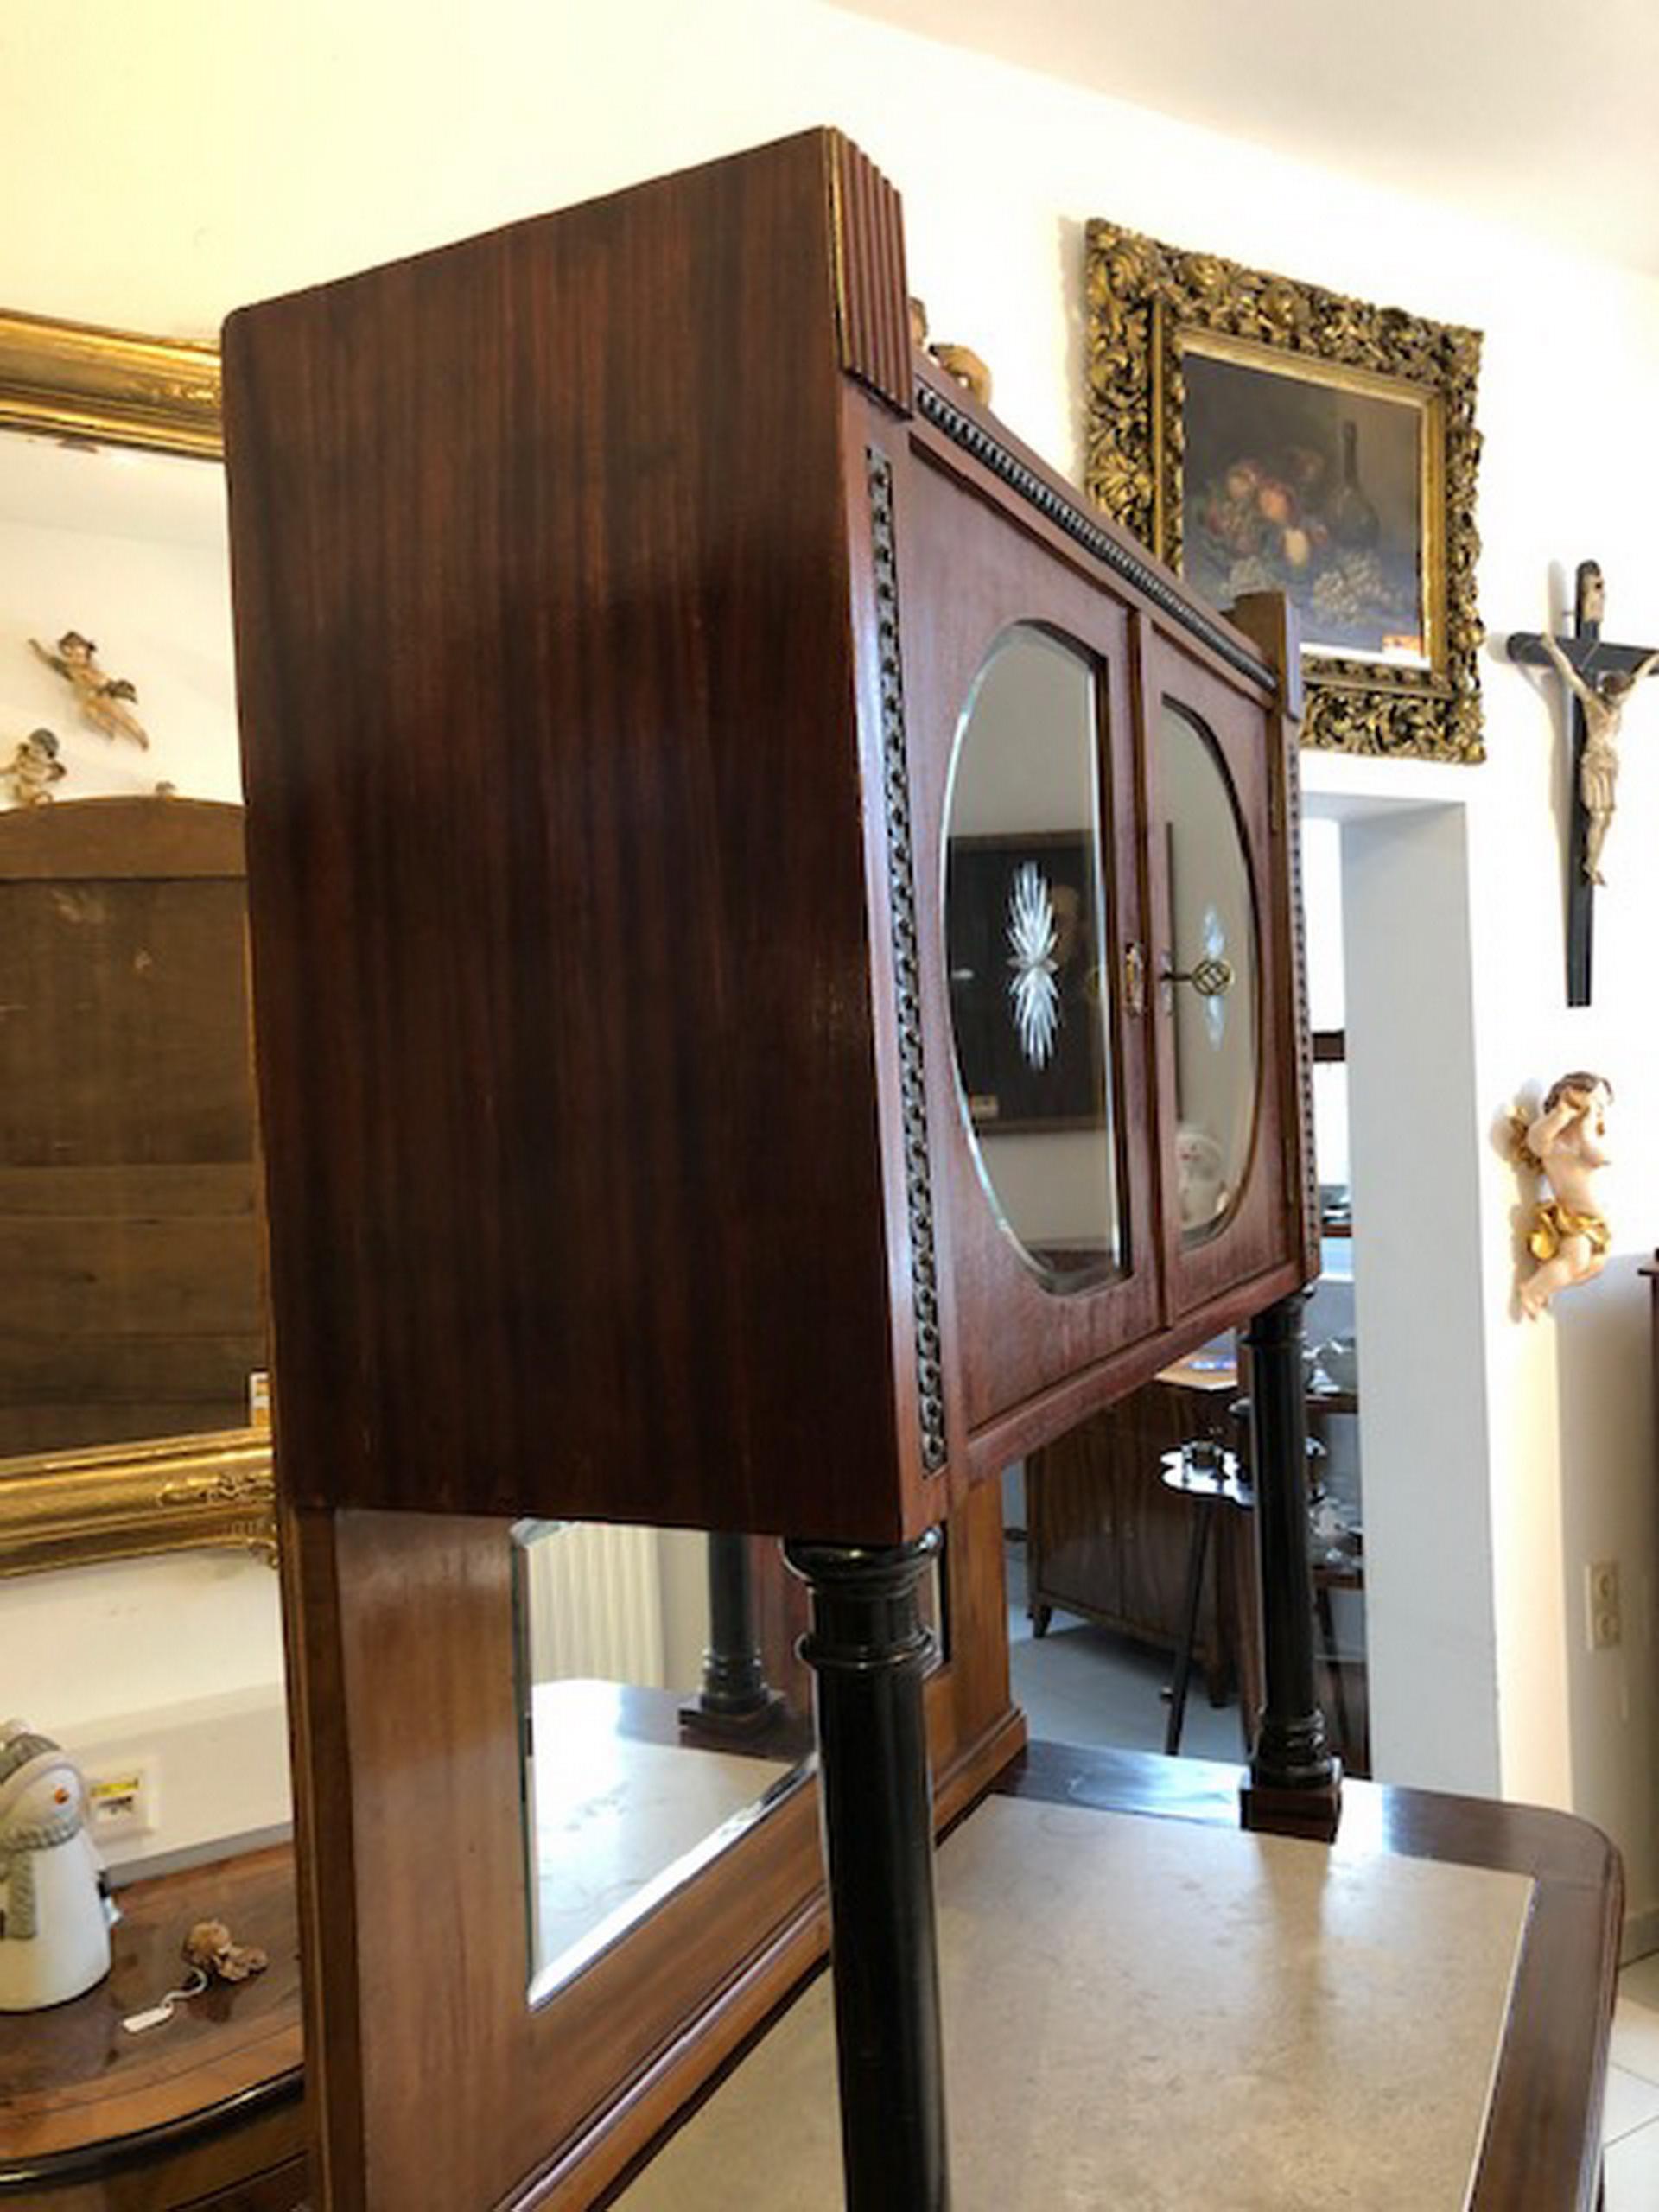 Hand-Crafted Dark Walnut Bookshelf Original Art Deco Cabinet with a Central Mirror